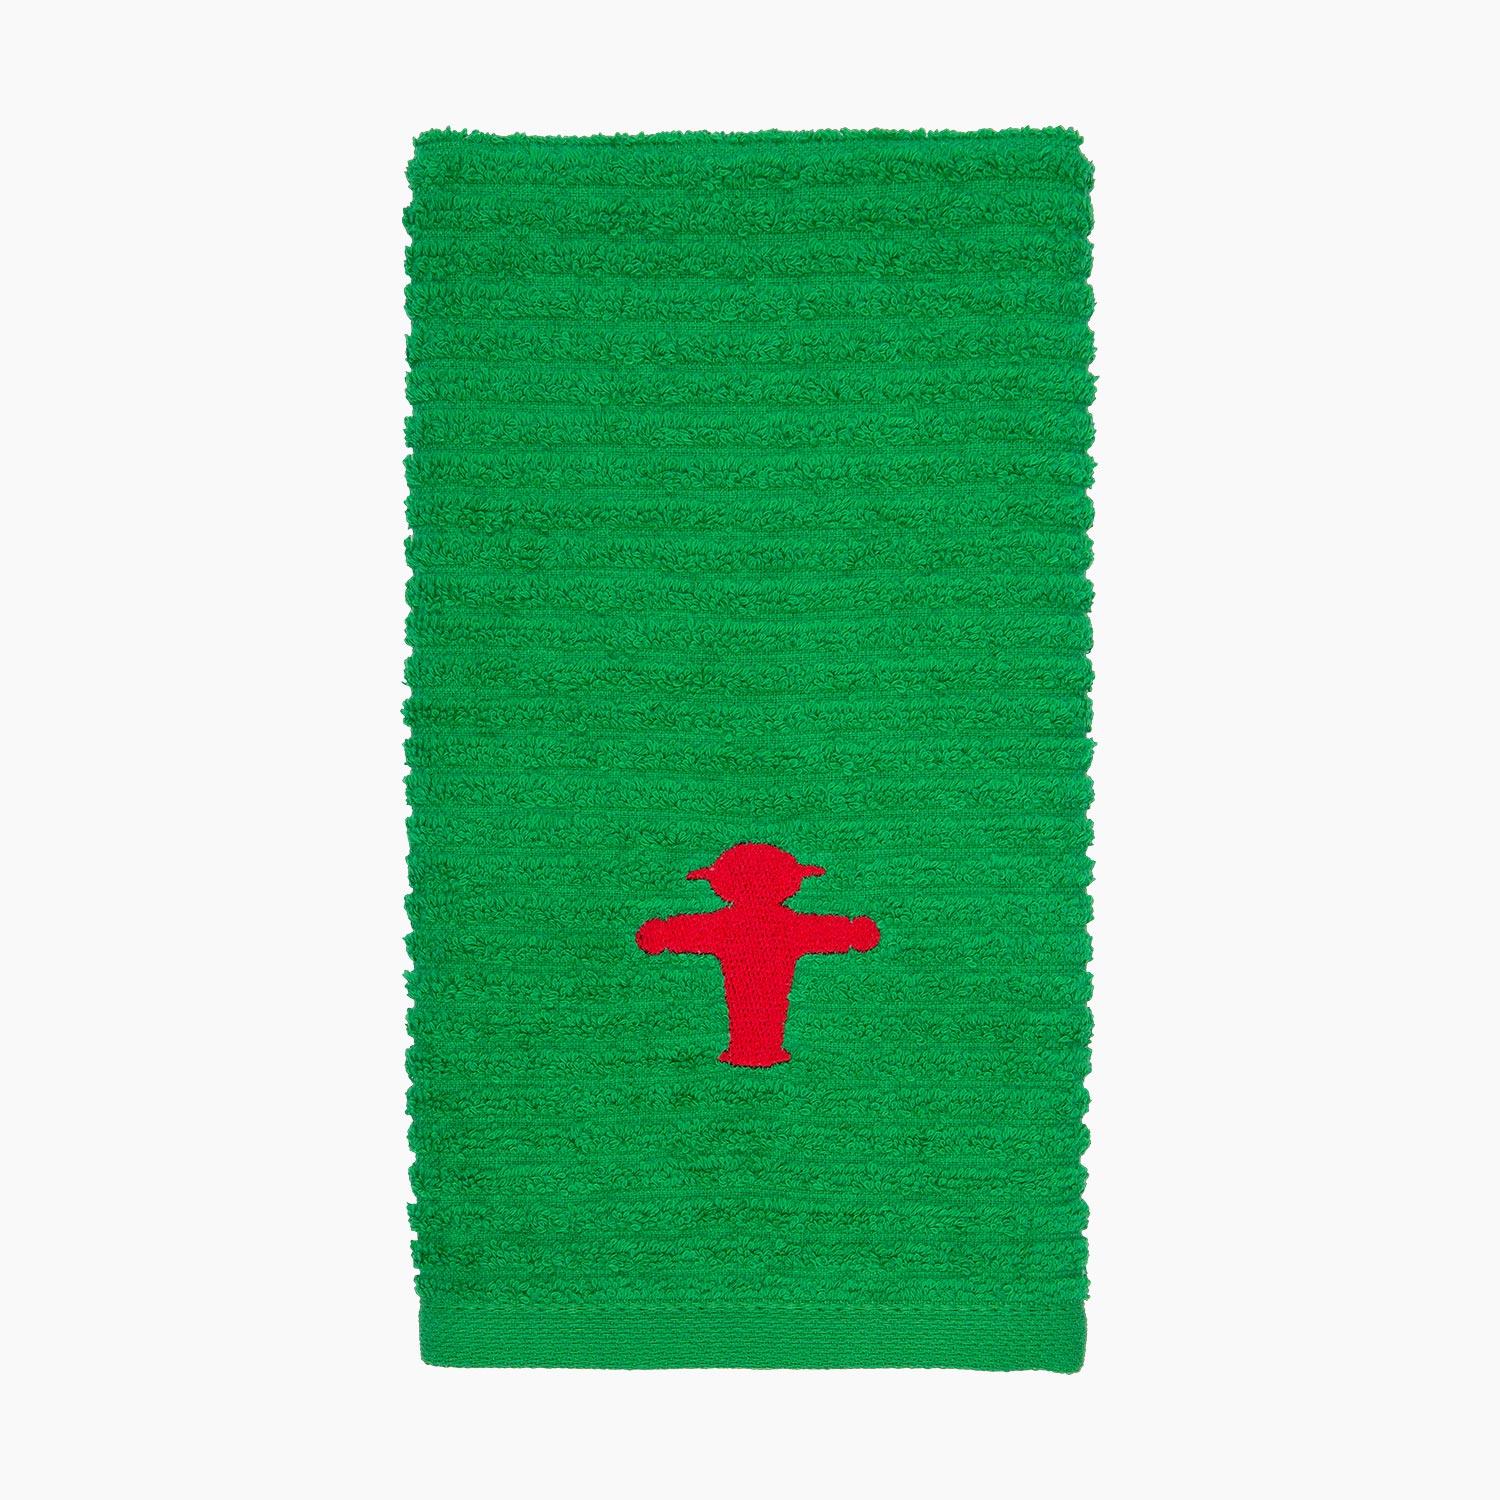 WASSERMÄNNCHEN green/ Towel Small